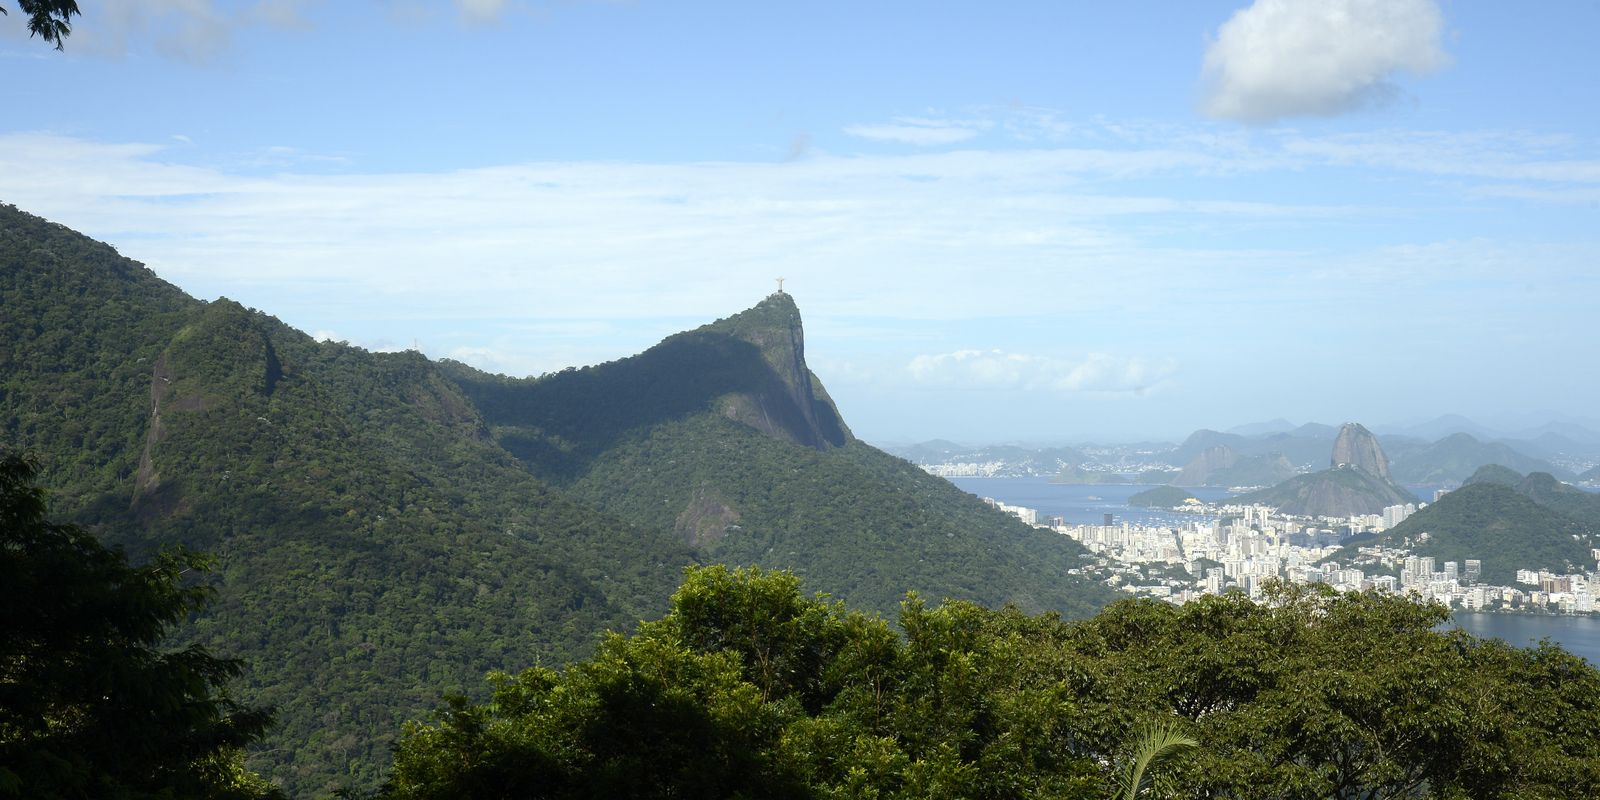 Brazilian Atlantic Forest - From Rio de Janeiro to Santa Catarina